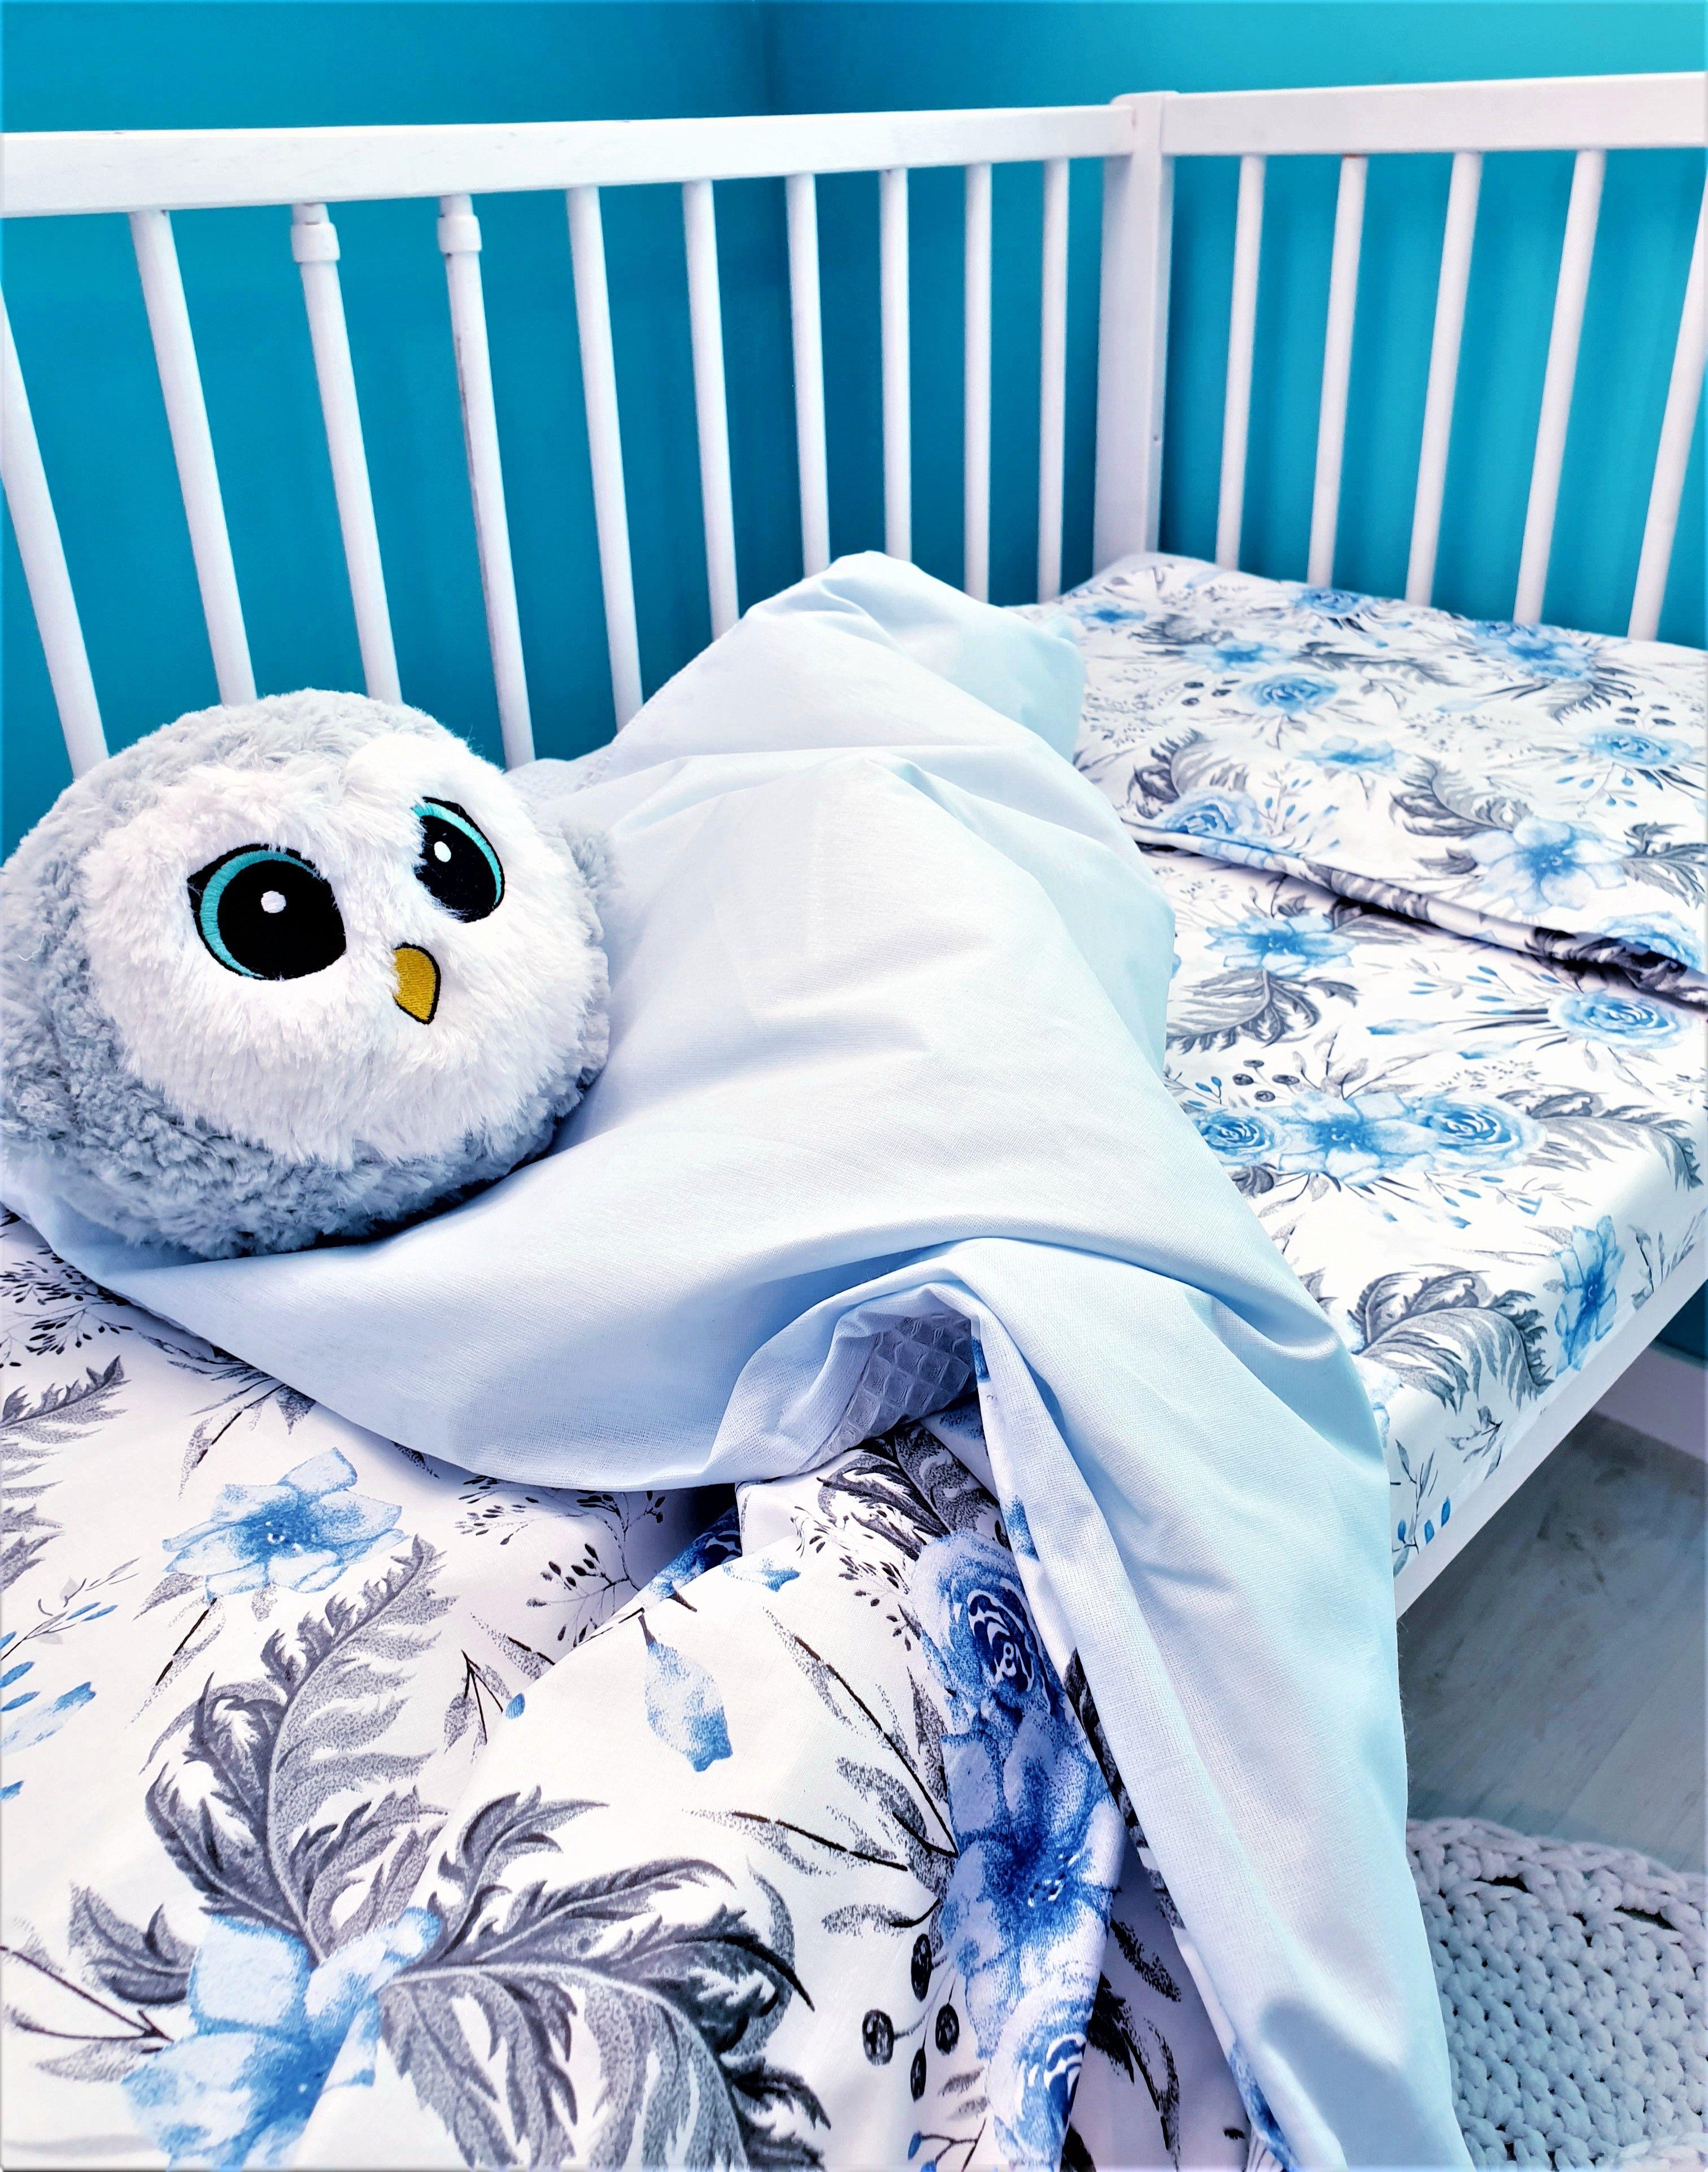 4in1 children's bedding set - blue rose and fern